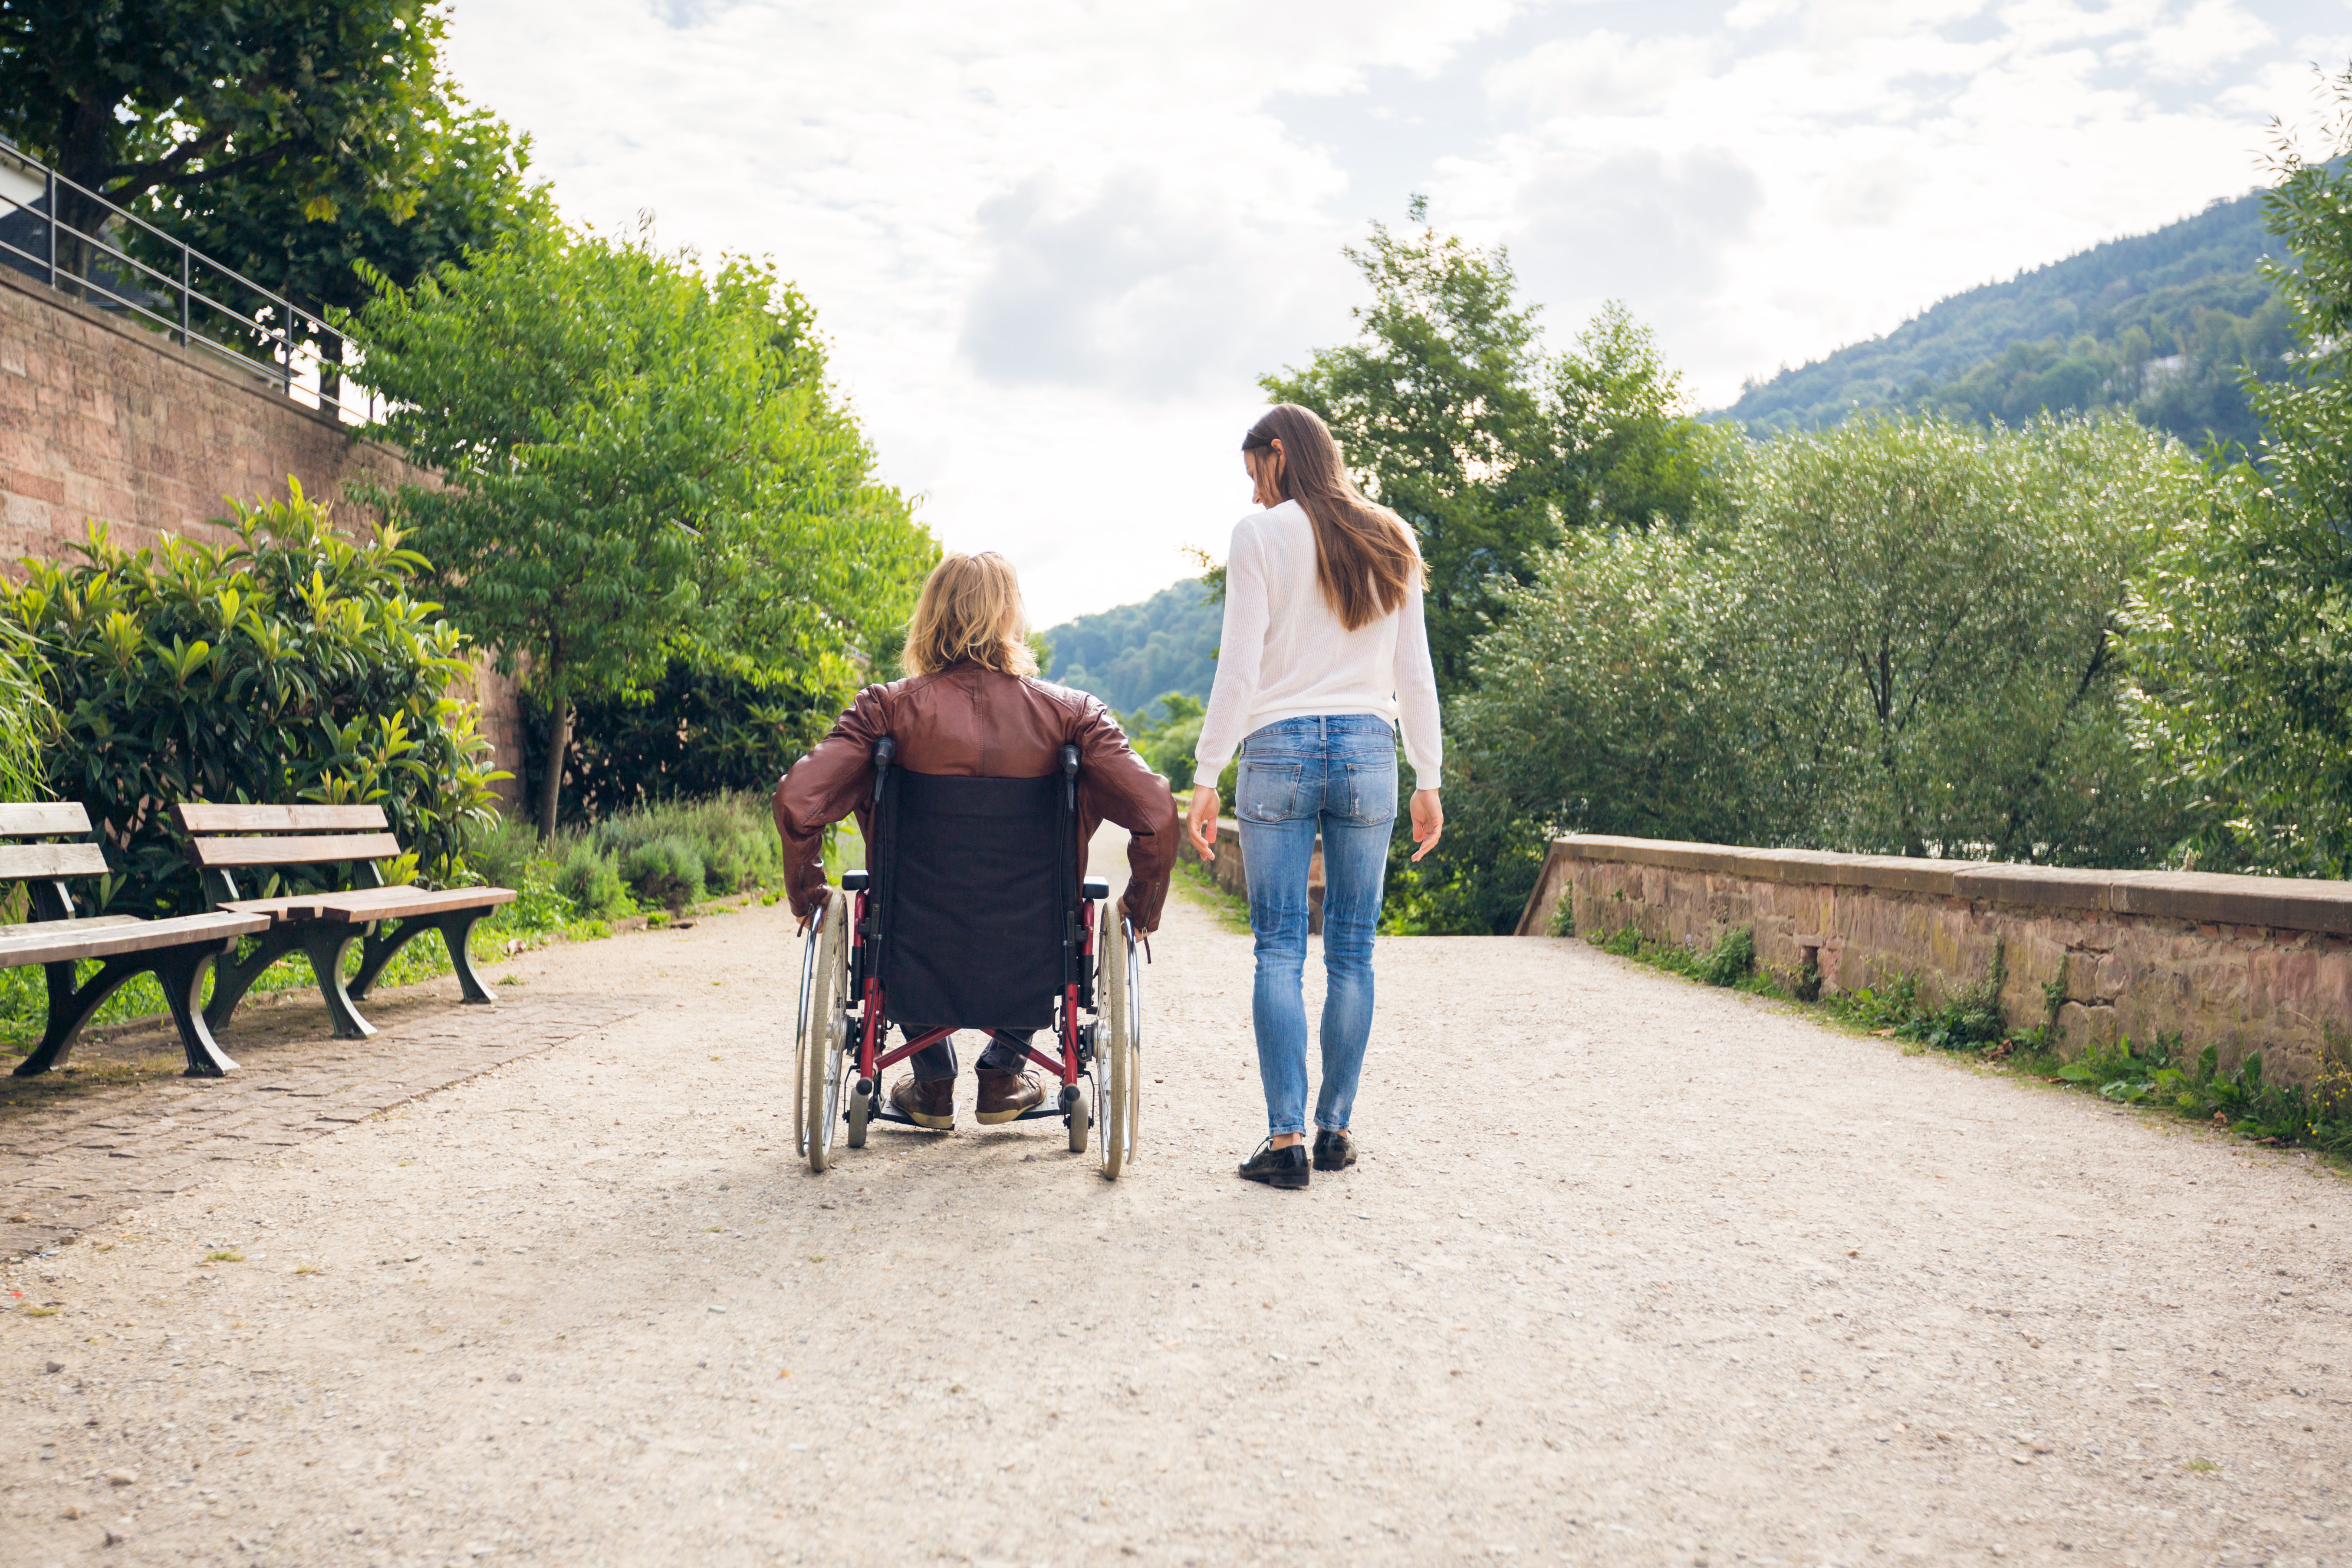 Hermana camina junto a hermano en silla de ruedas. | Foto: Shutterstock